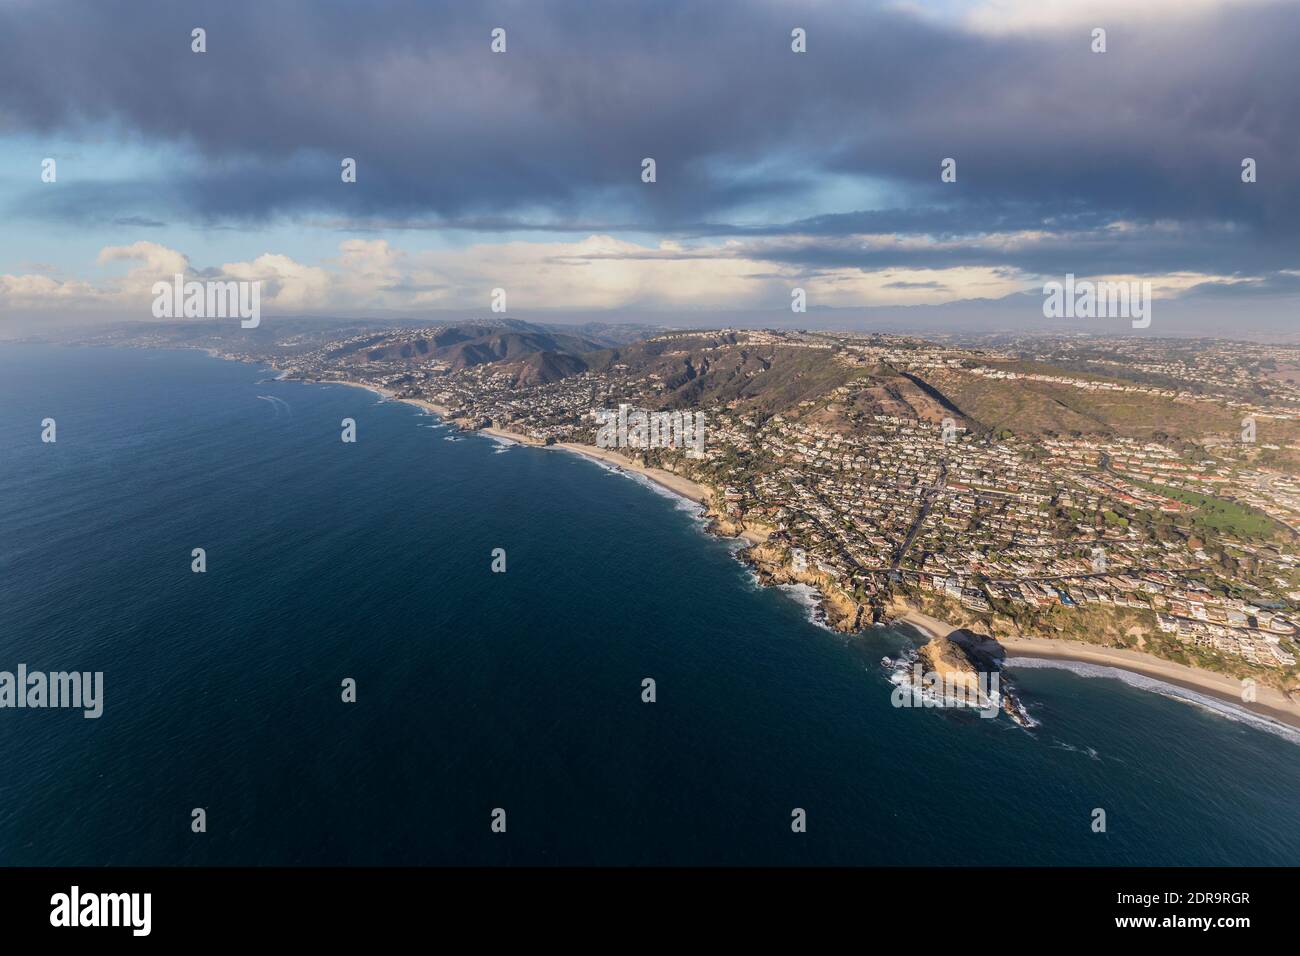 Aerial view of the Laguna Beach coast with stormy sky in Orange County, California. Stock Photo